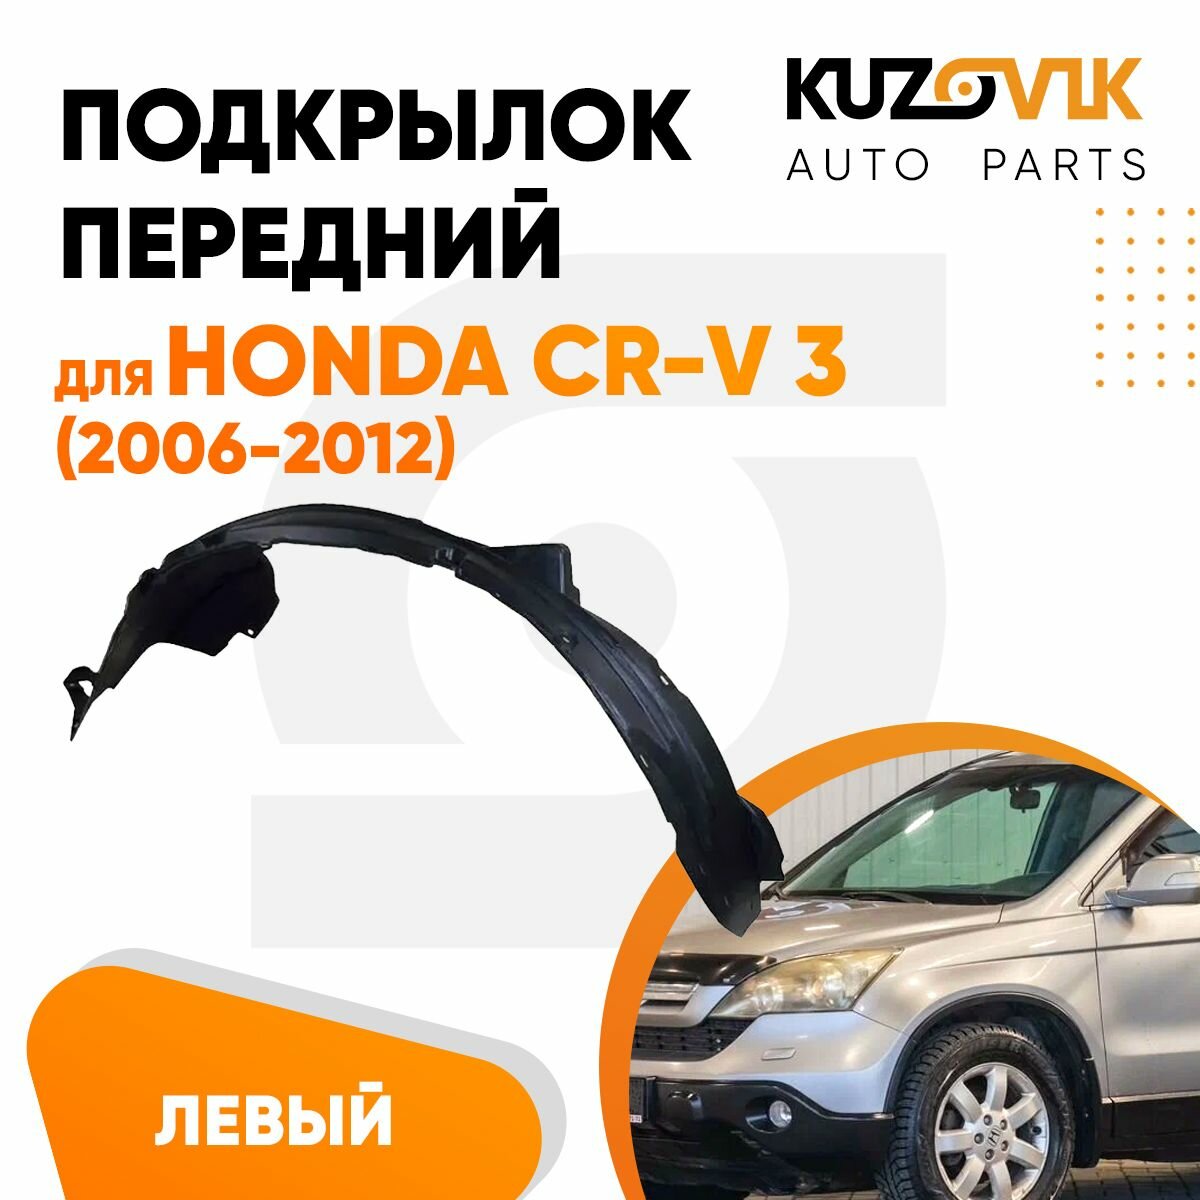 Подкрылок передний для Хонда Honda CR-V 3 (2006-2012) левый